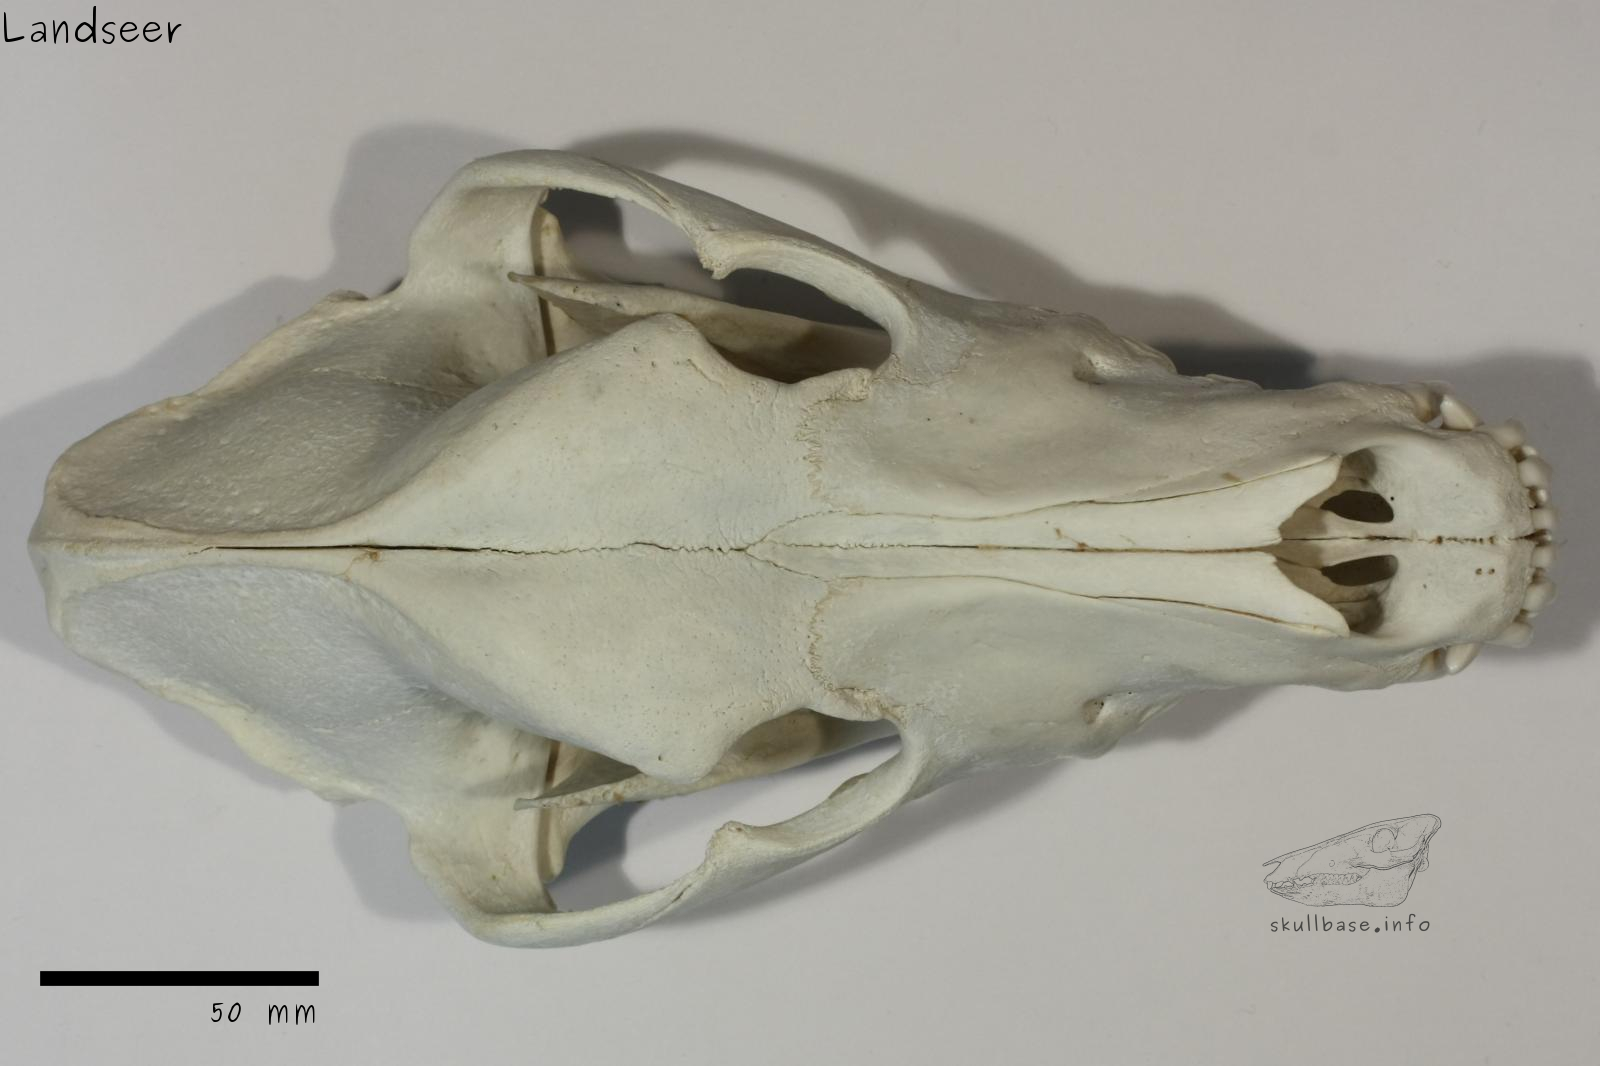 Landseer (Canis lupus familiaris) skull dorsal view